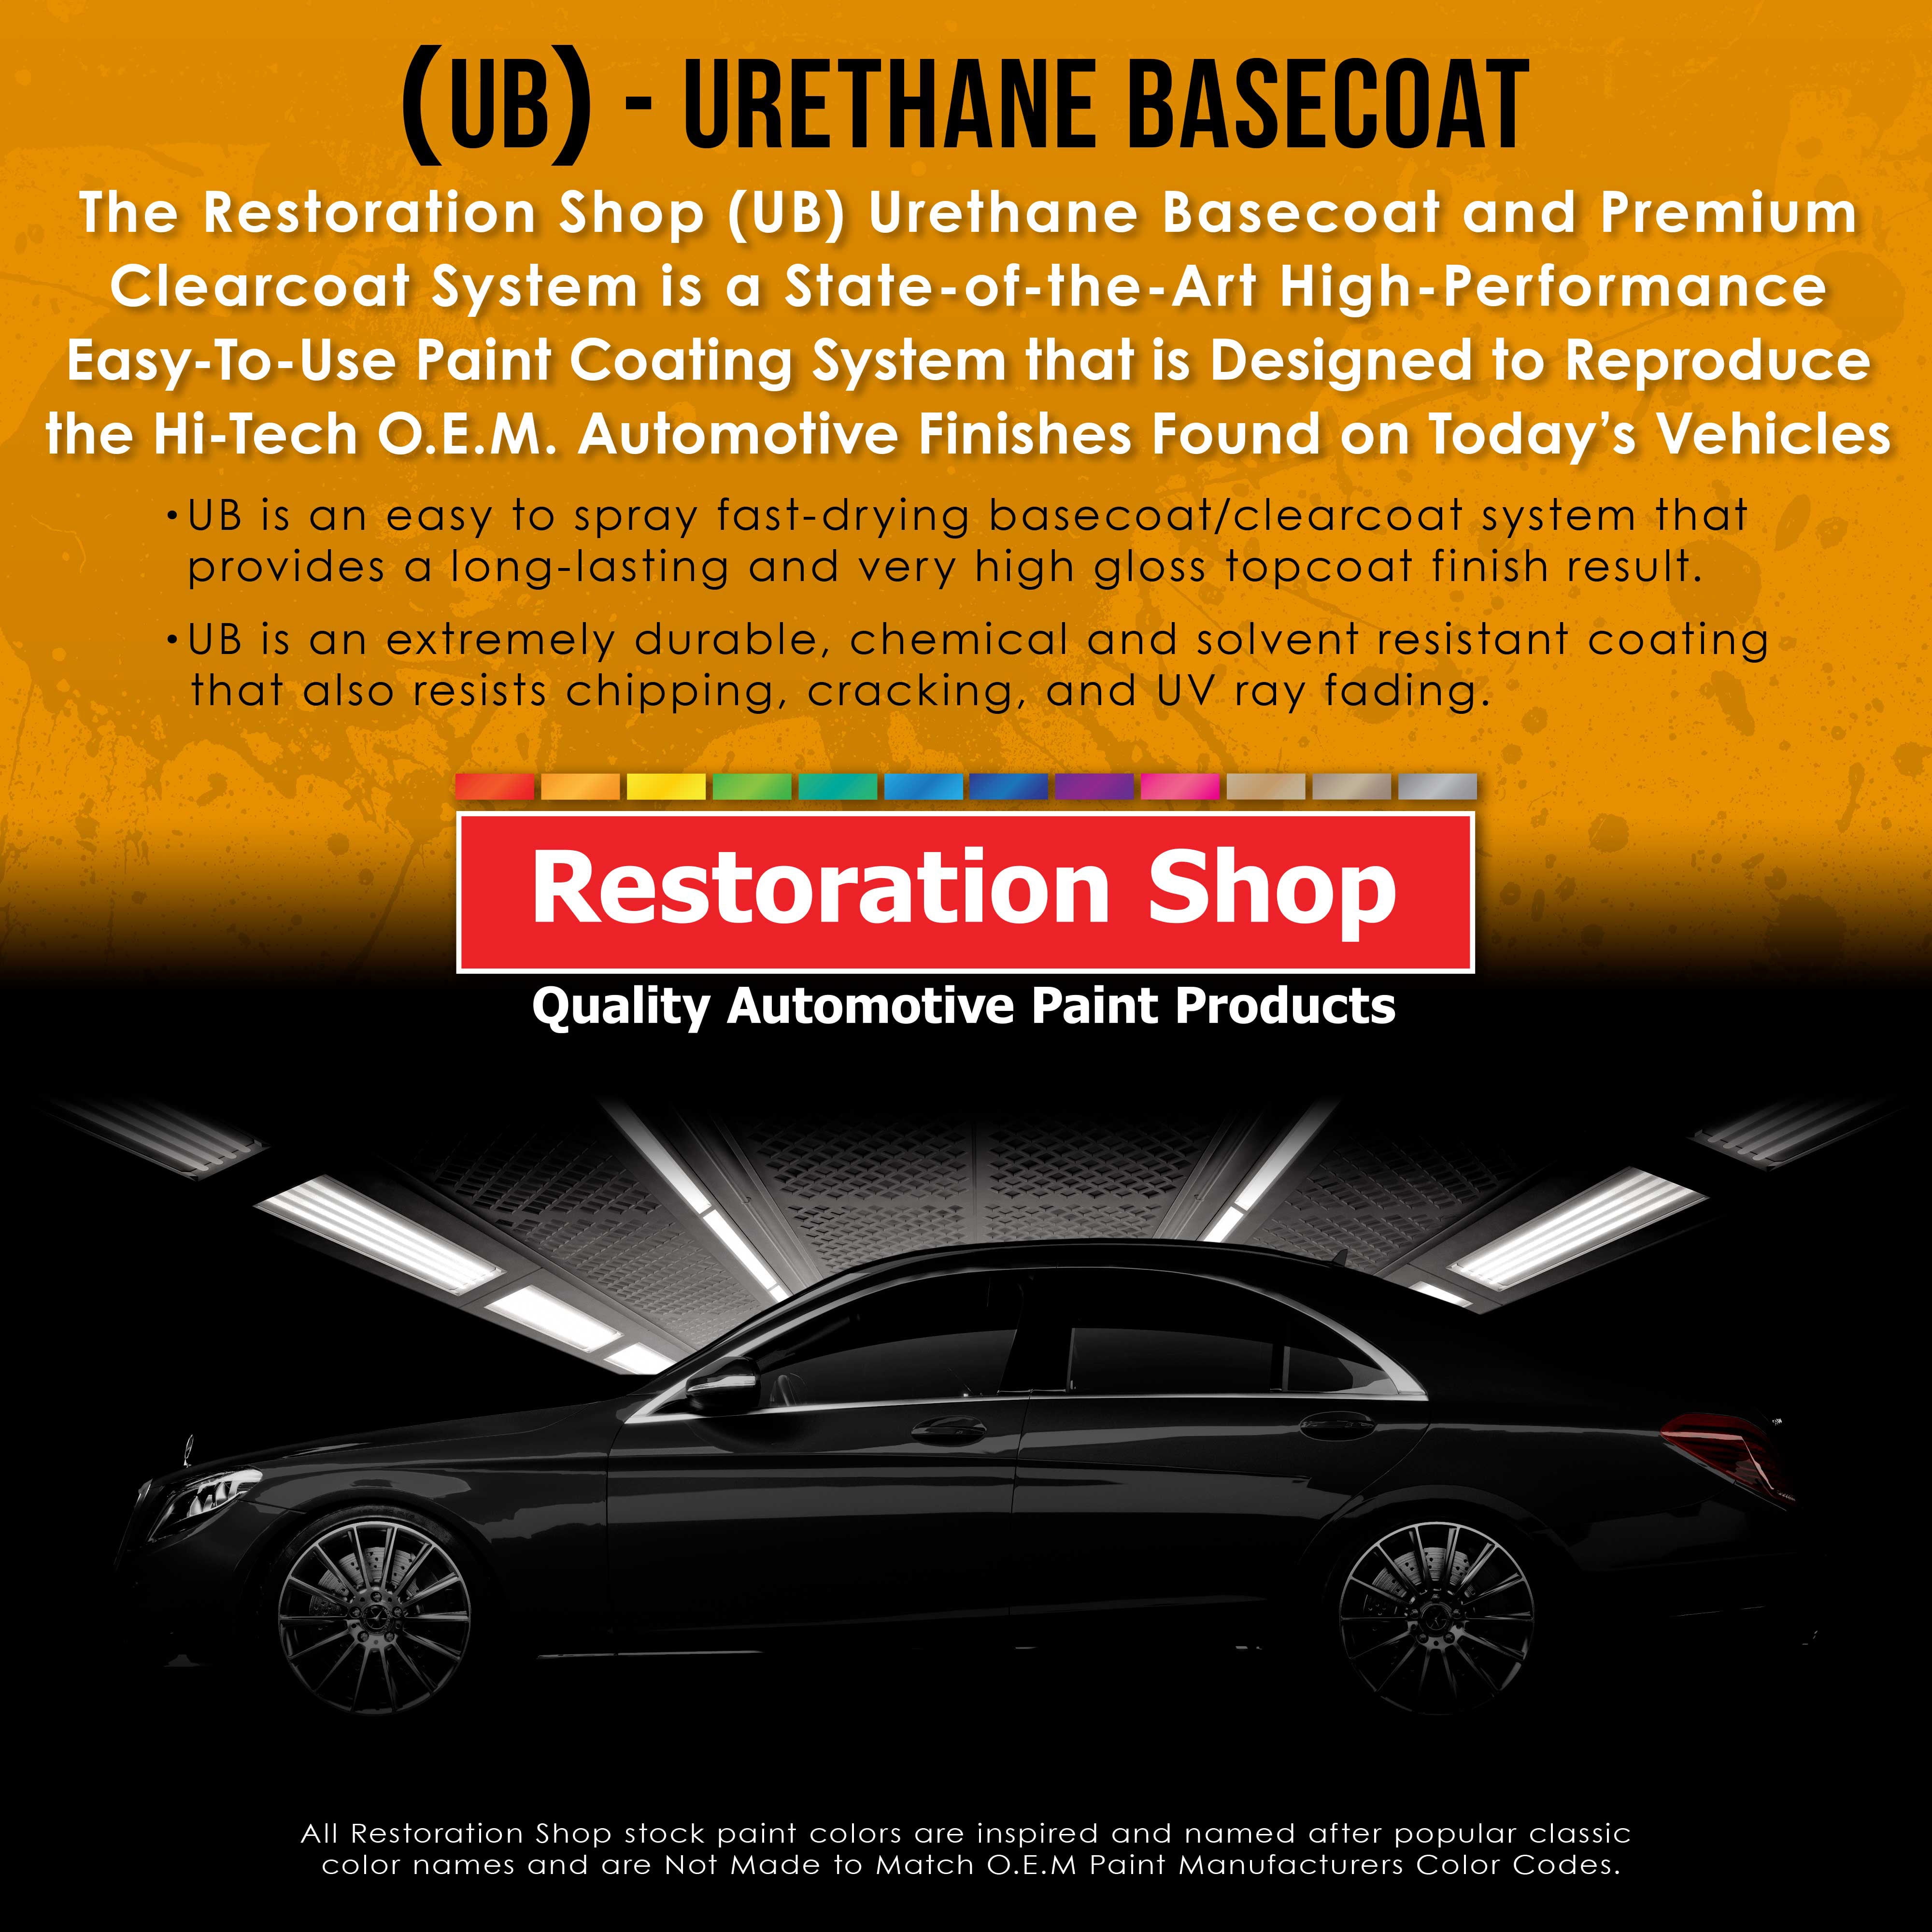 Restoration Shop - Jet Black Urethane Basecoat with Clearcoat Auto Paint -  Complete Medium Quart Paint Kit - Professional High Gloss Automotive, Car